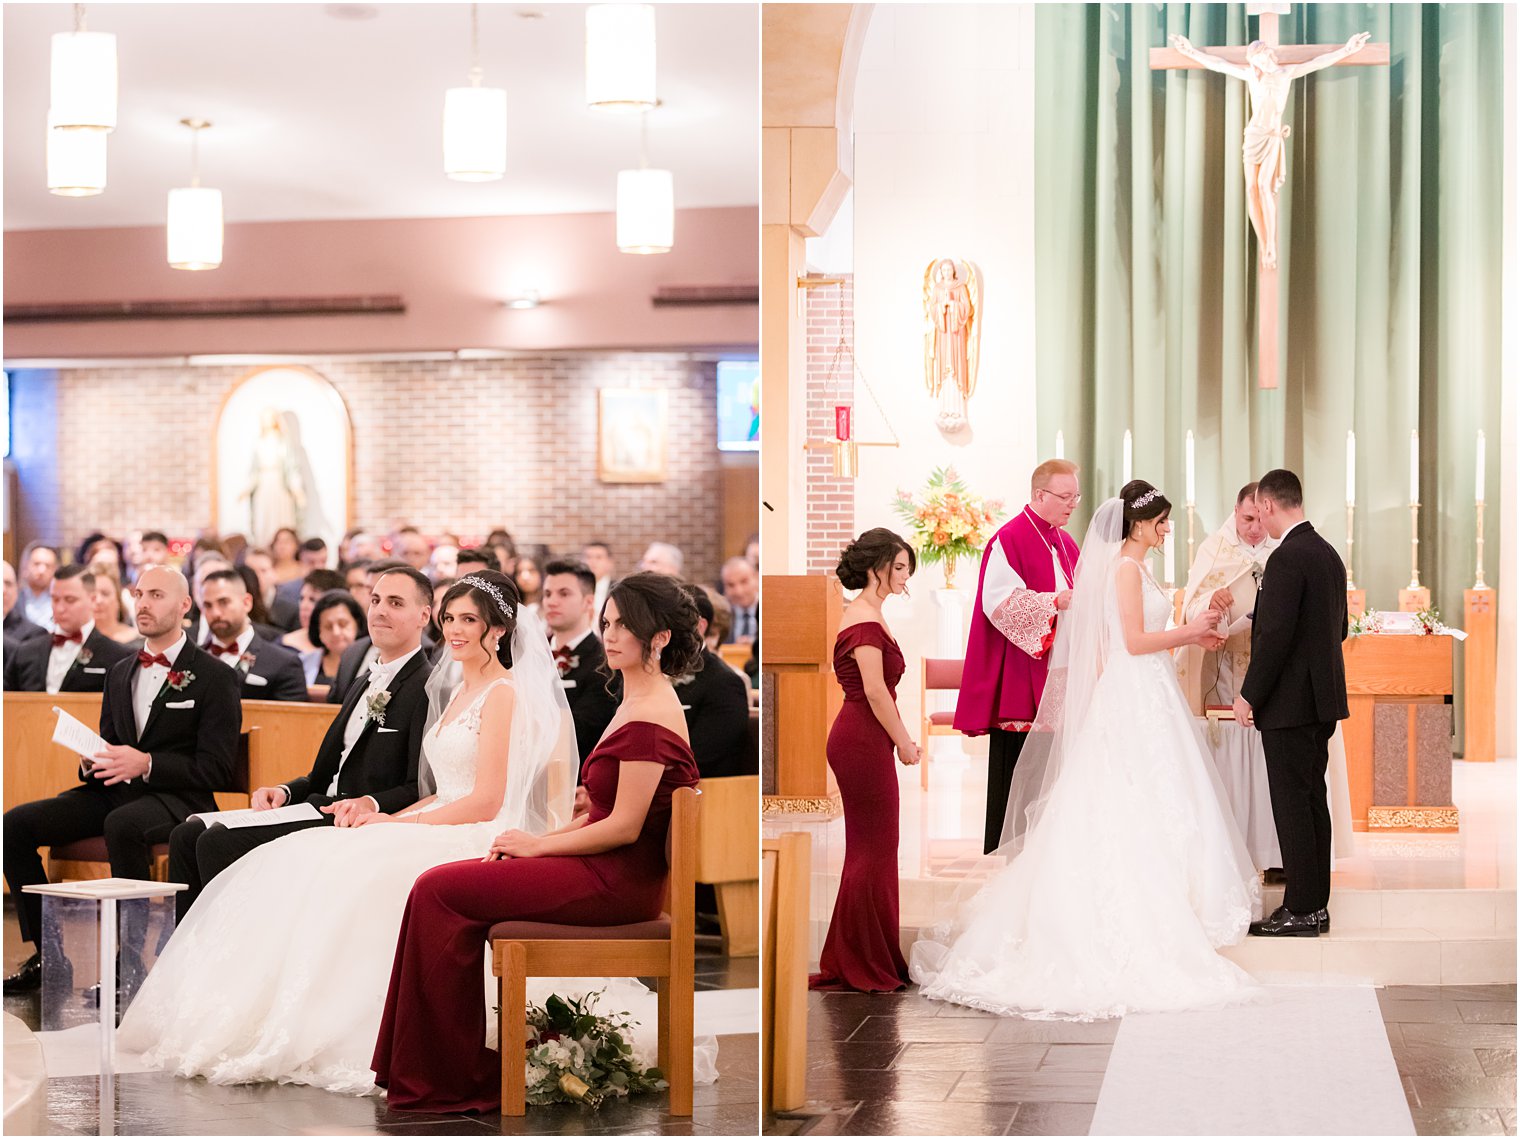 elegant and traditional church wedding photographed by Idalia Photography